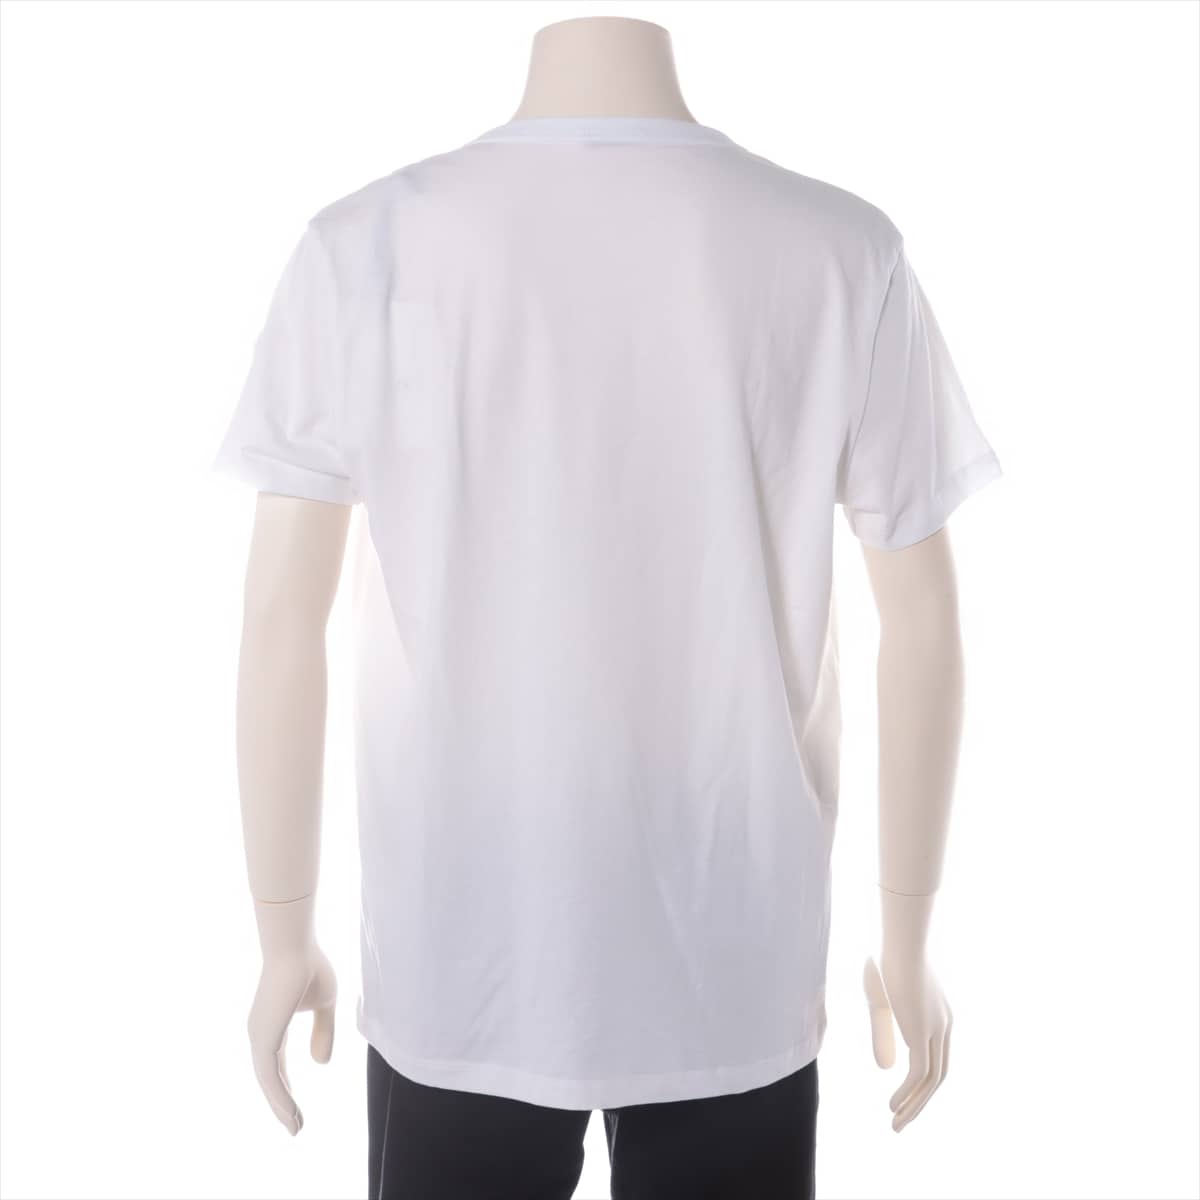 Moncler 16 years Cotton T-shirt L Men's White